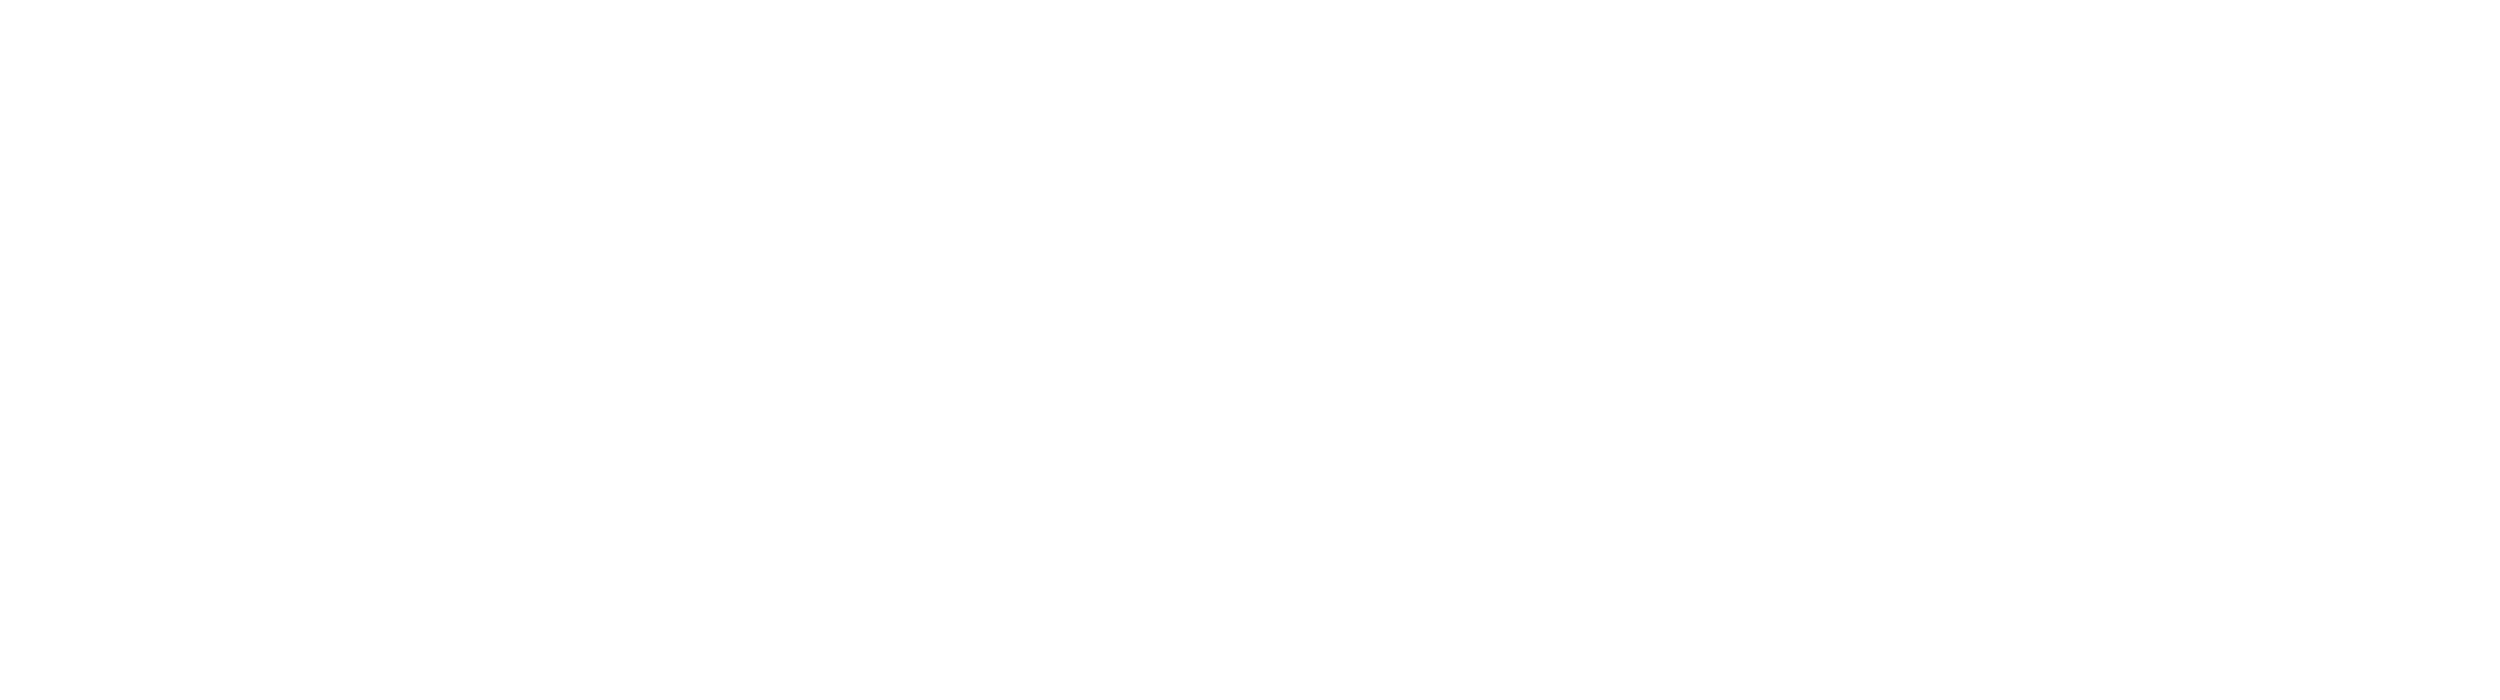 HMG Brand Development